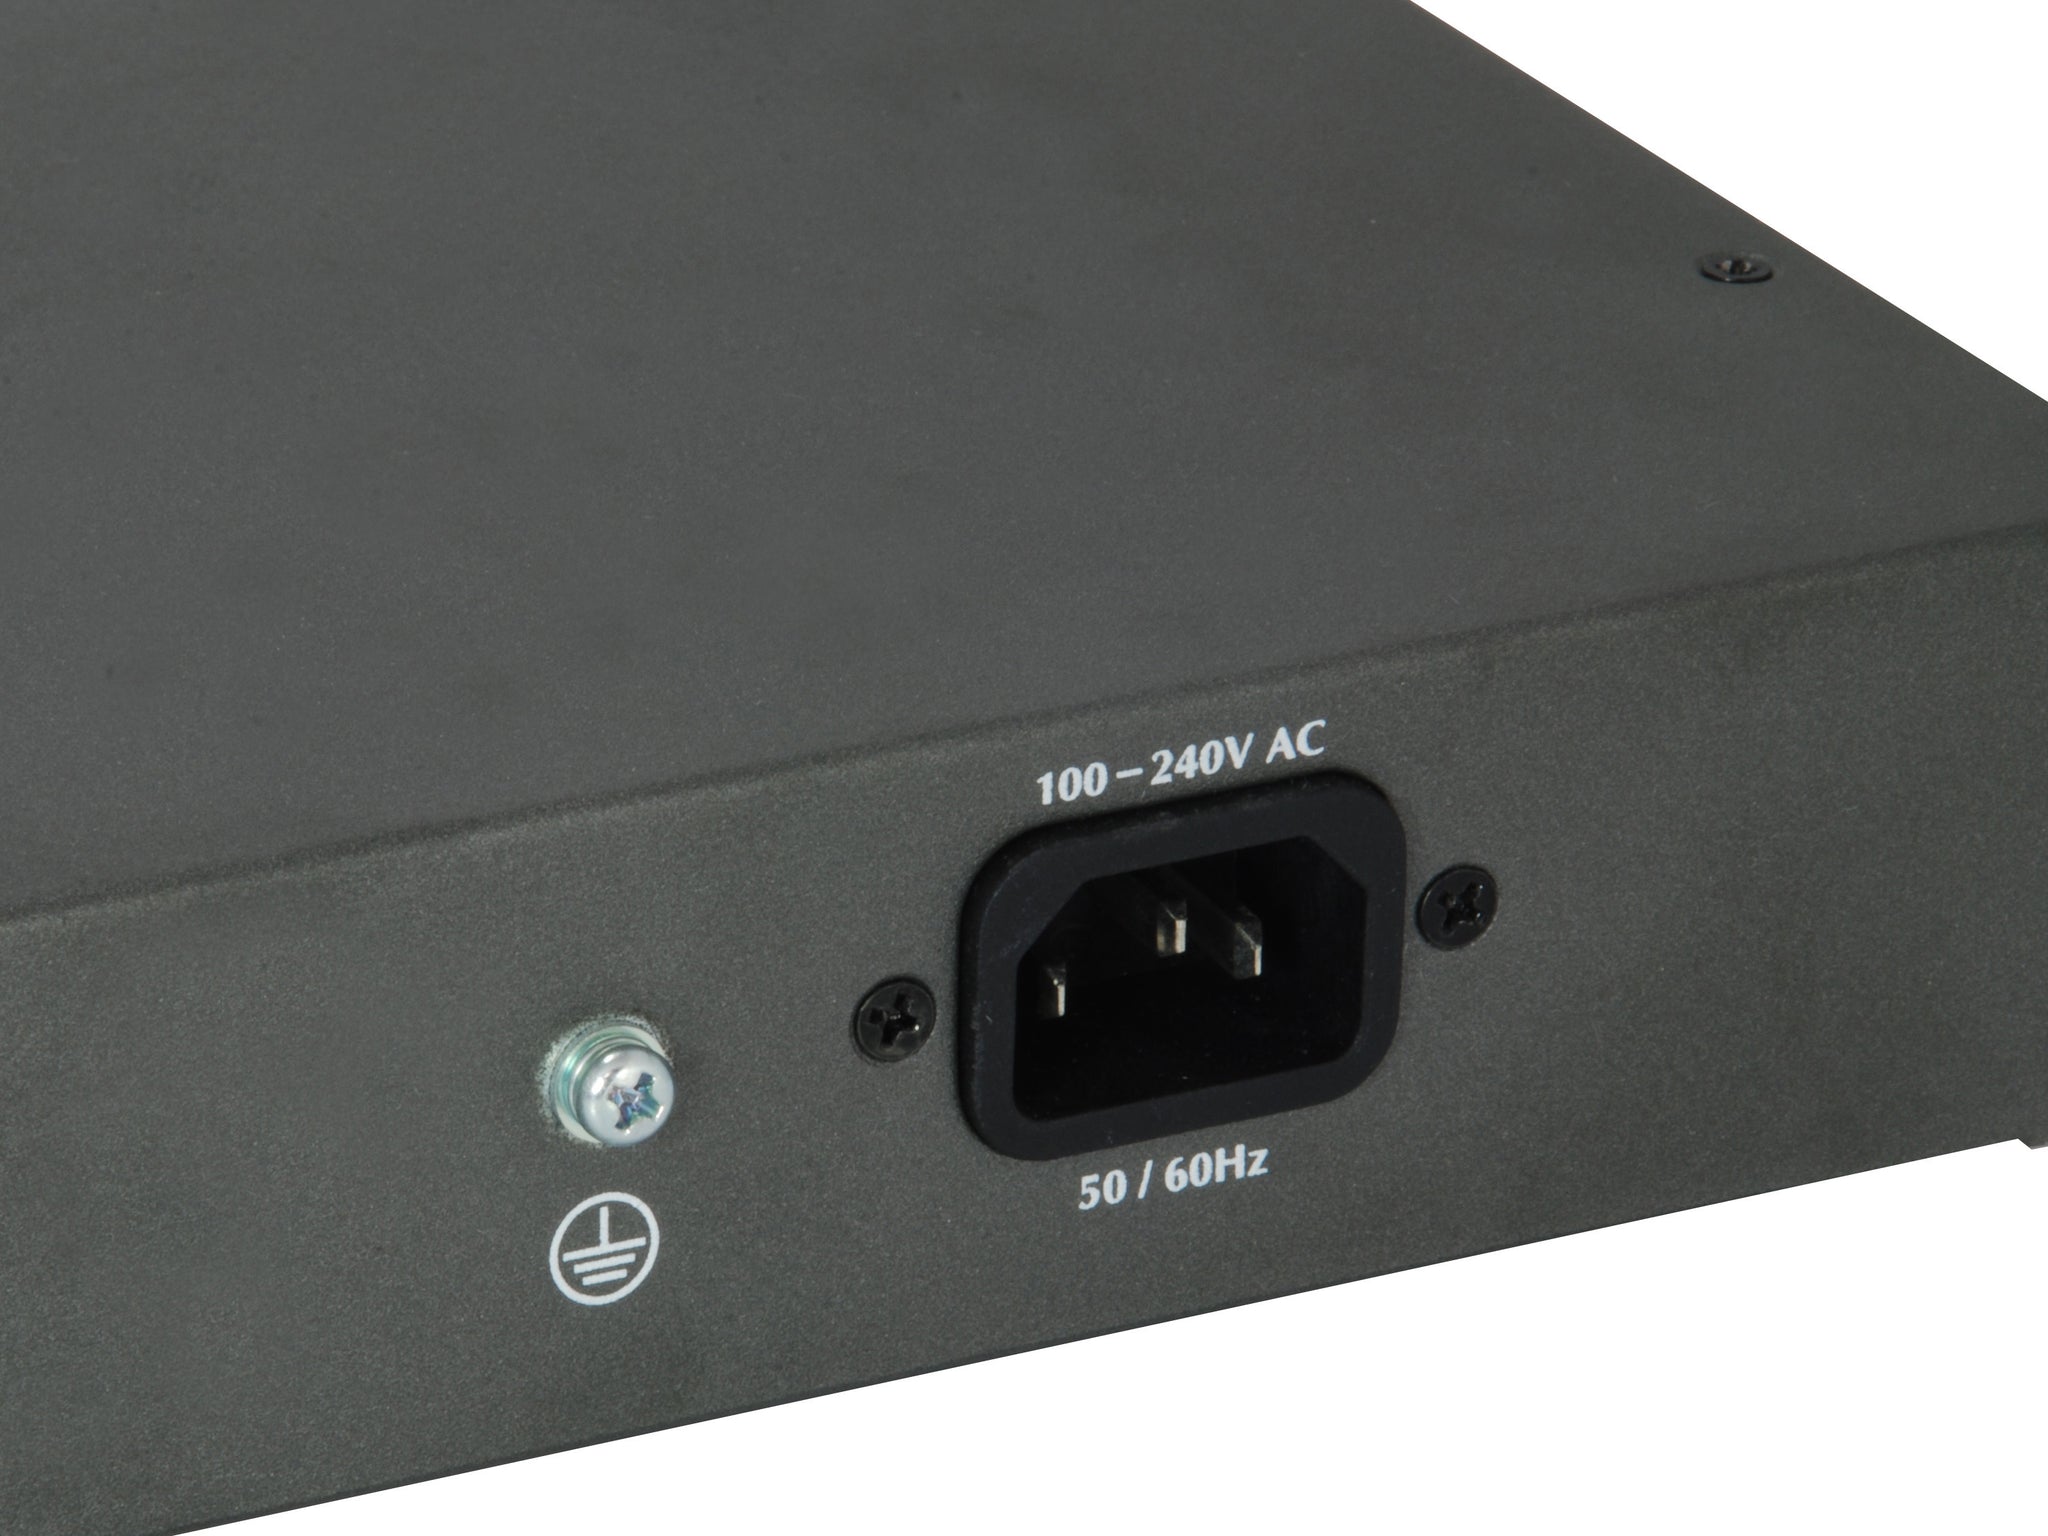 GEP-2652 26-Port Web Smart Gigabit PoE Switch, 2 x Gigabit SFP, 24 PoE Outputs, 370W PoE Power Budget